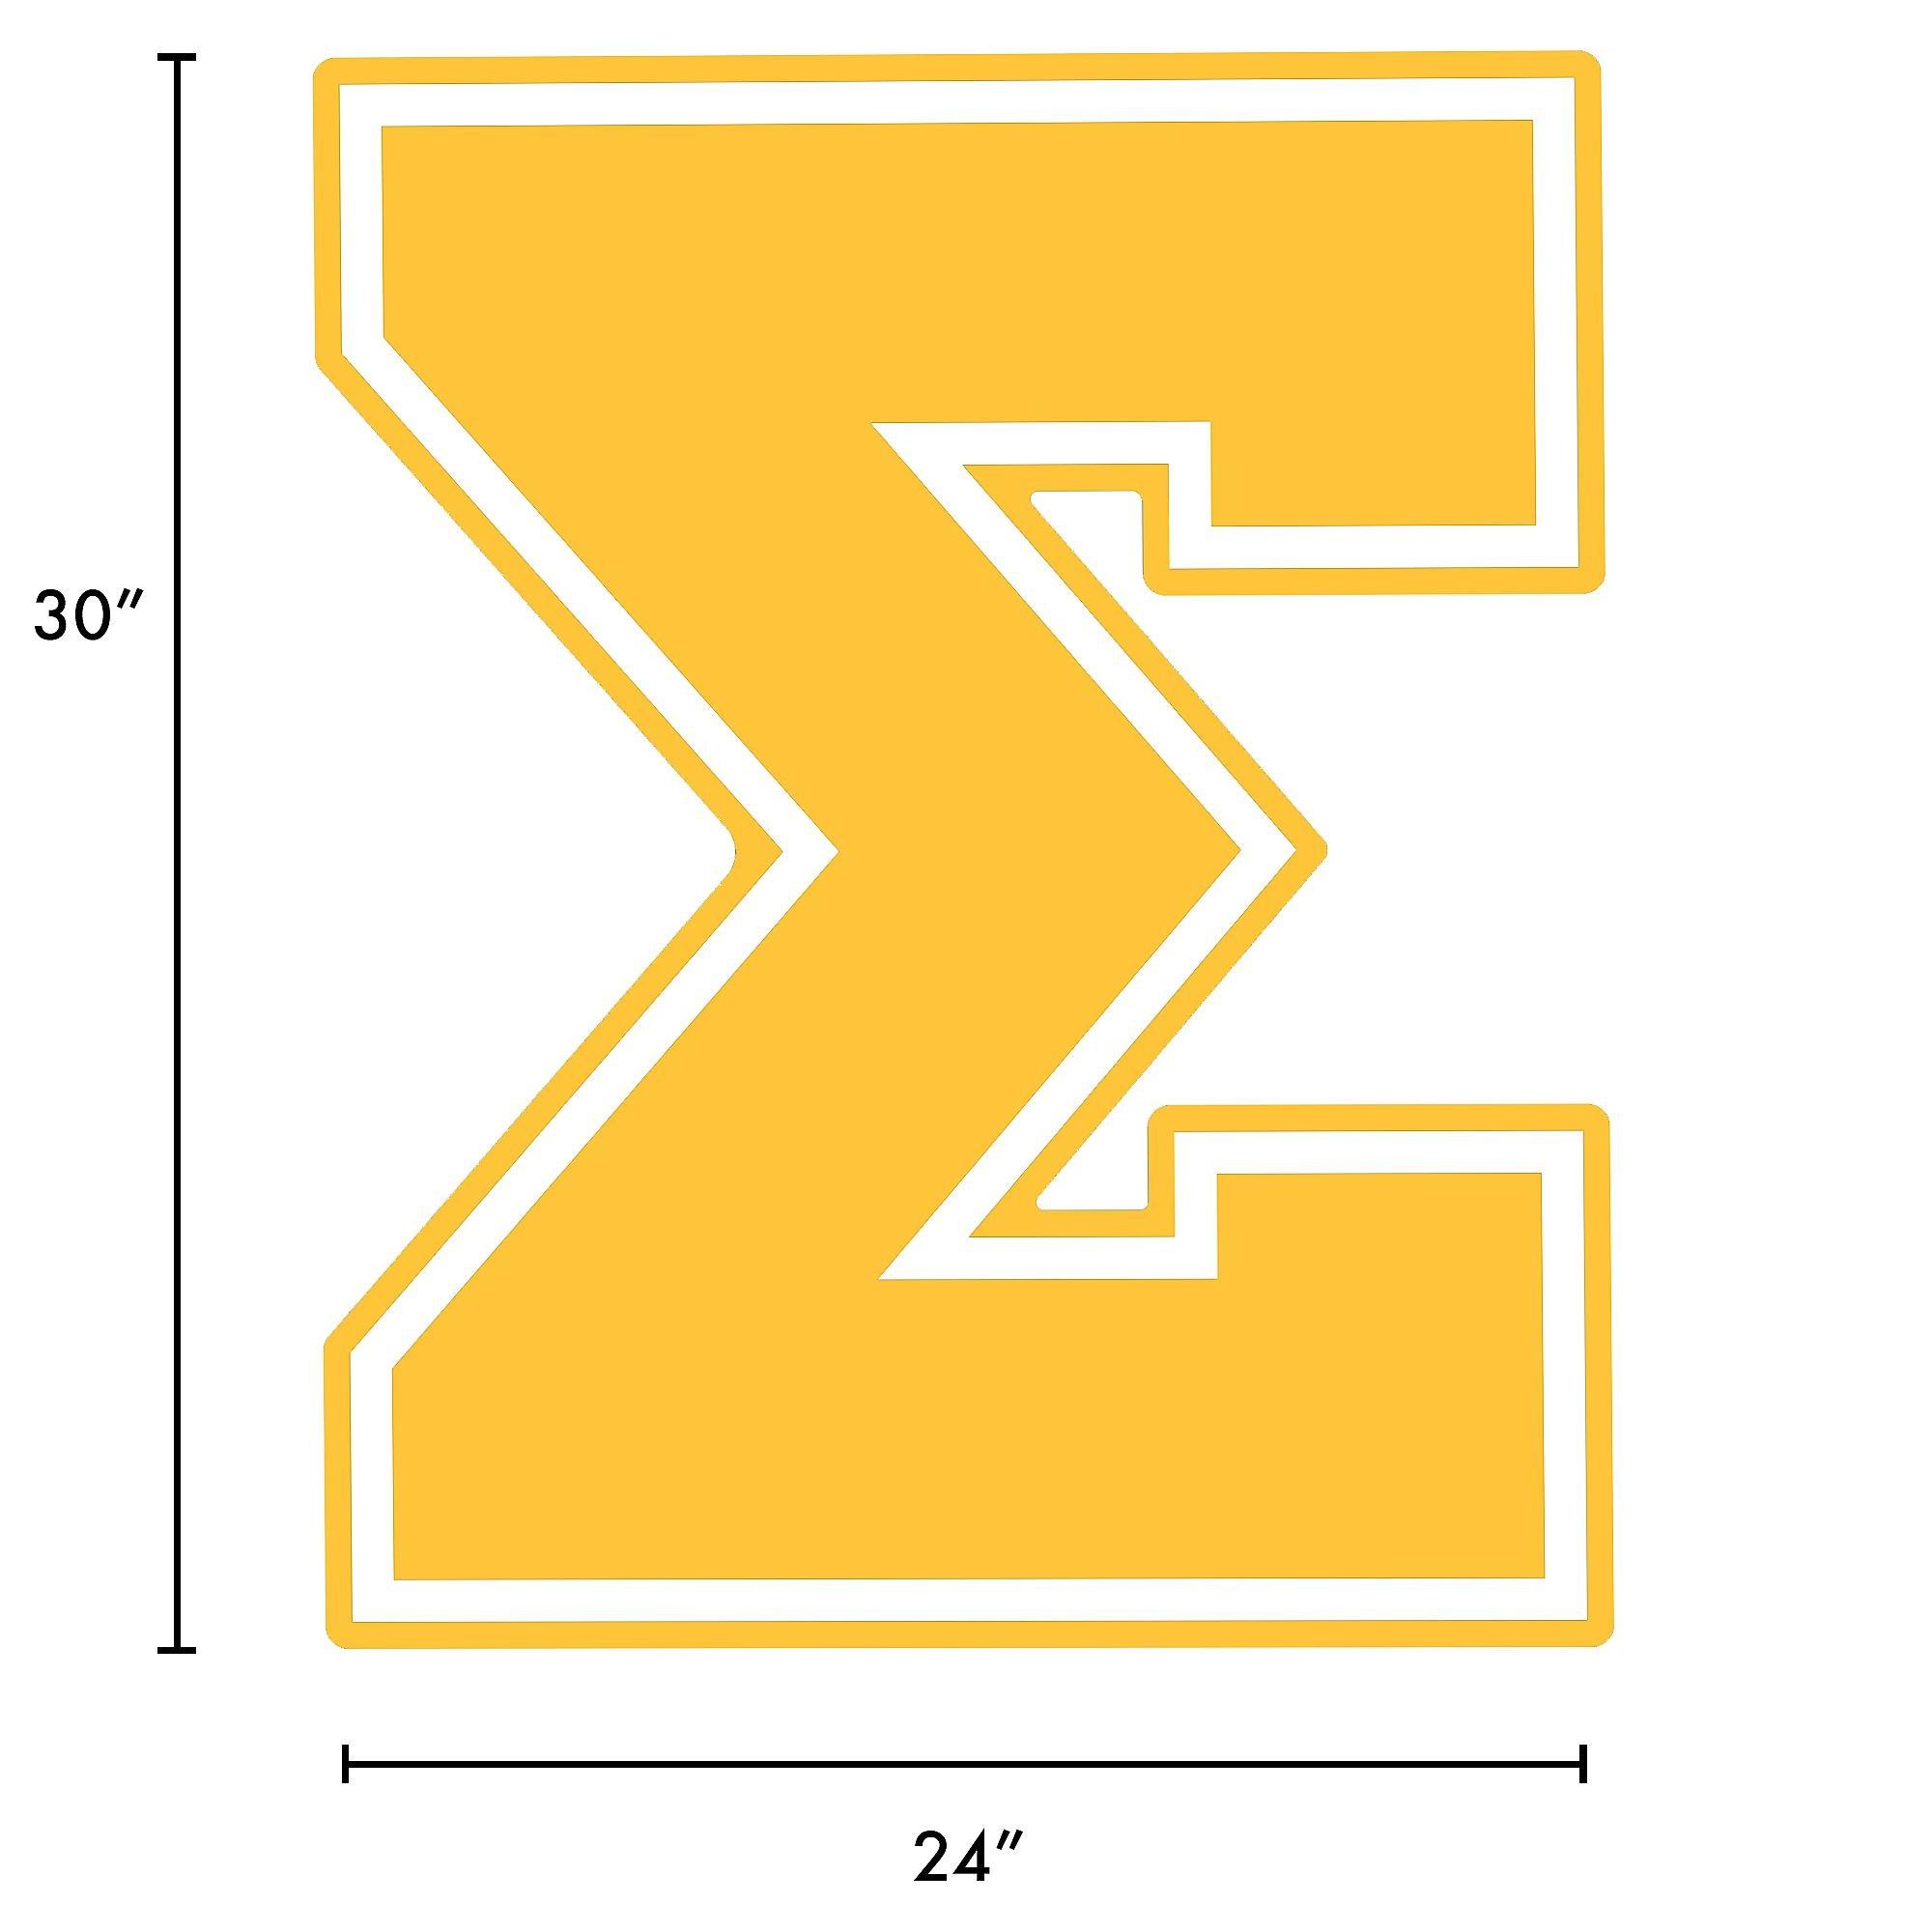 sigma greek symbol